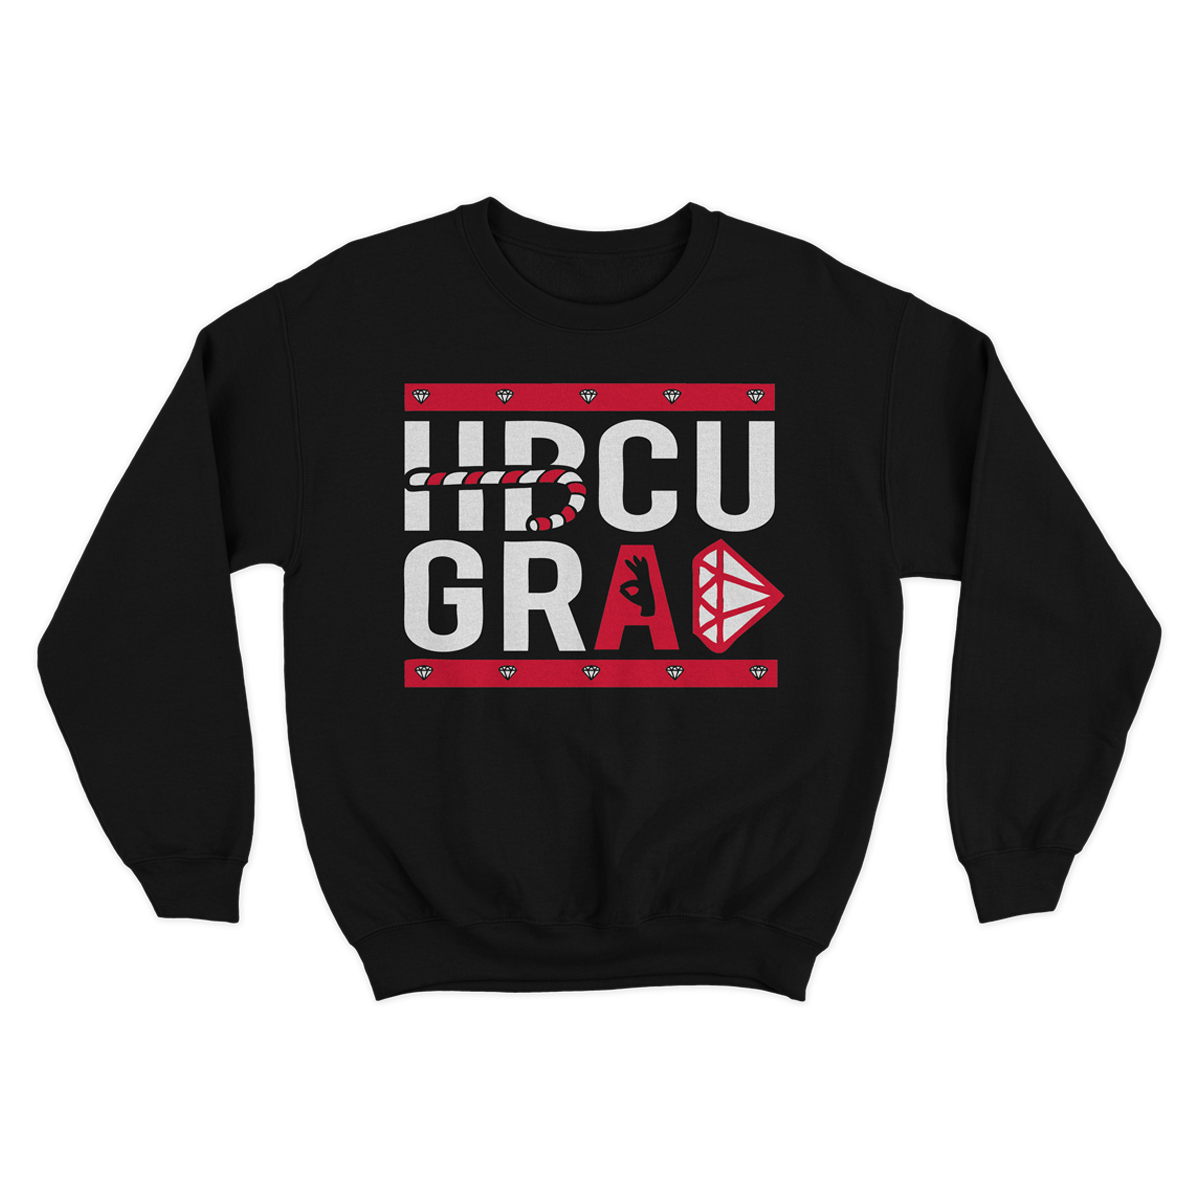 HBCU Grad | Diamond Edition | Sweatshirt - Black